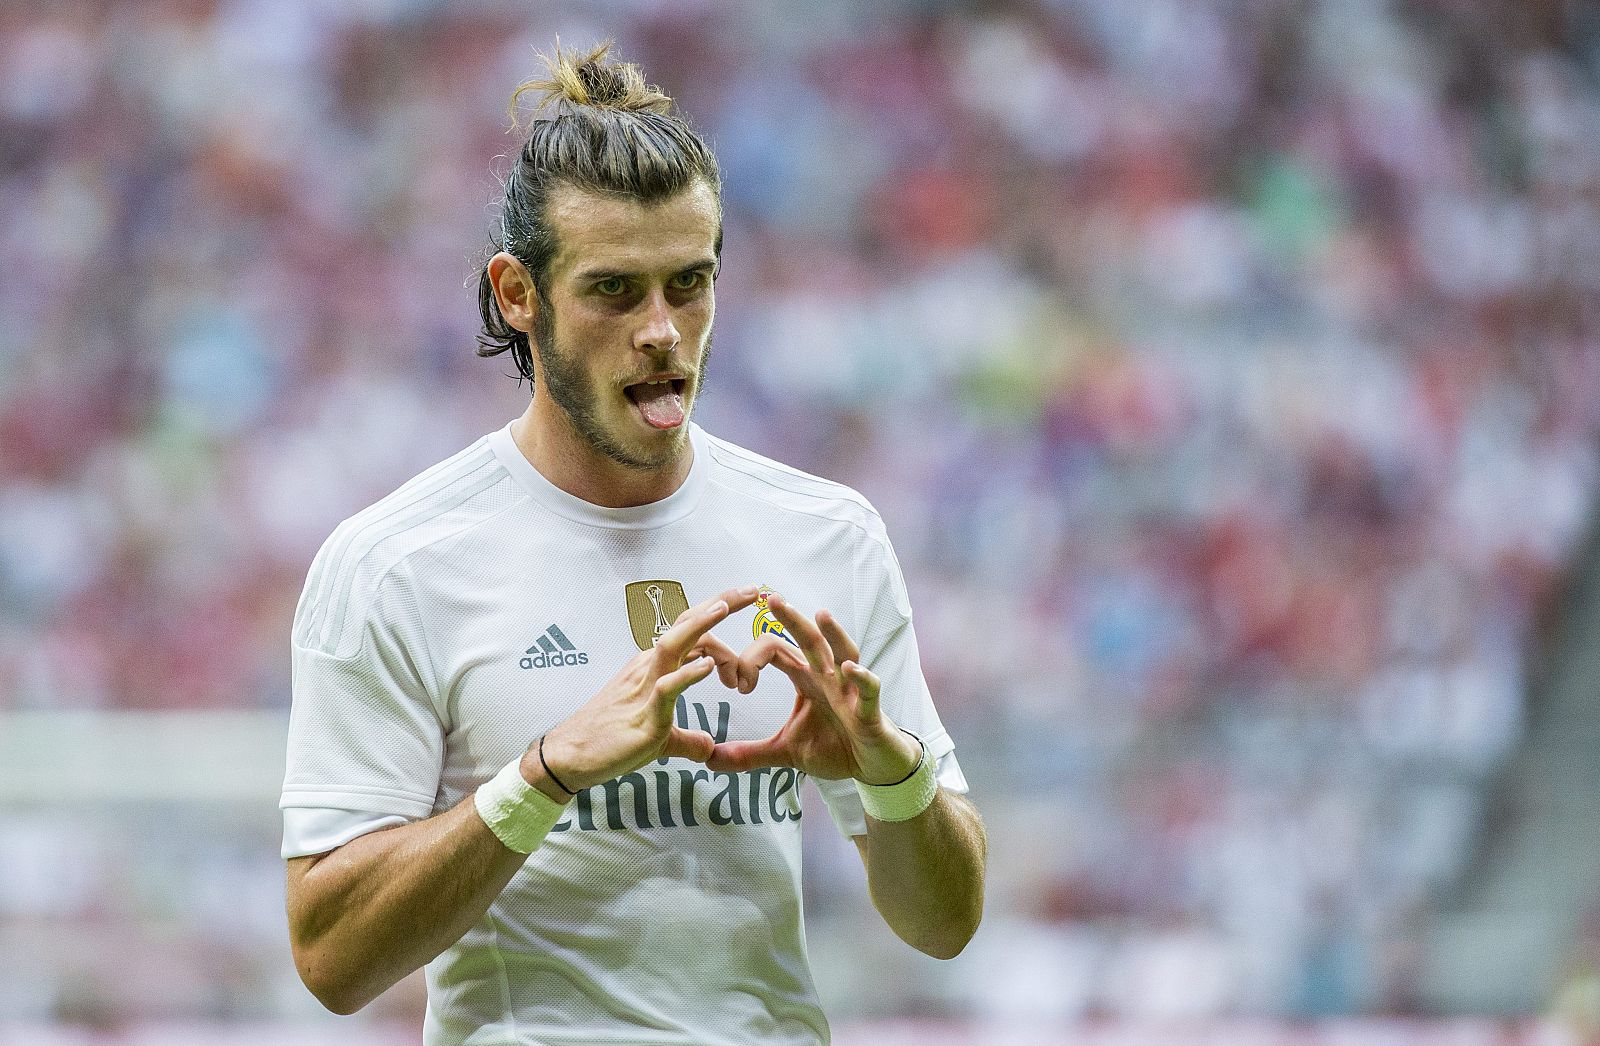 Imagen del centrocampista galés del Real Madrid, Gareth Bale, durante la semifinal contra el Tottenham Hotspur.